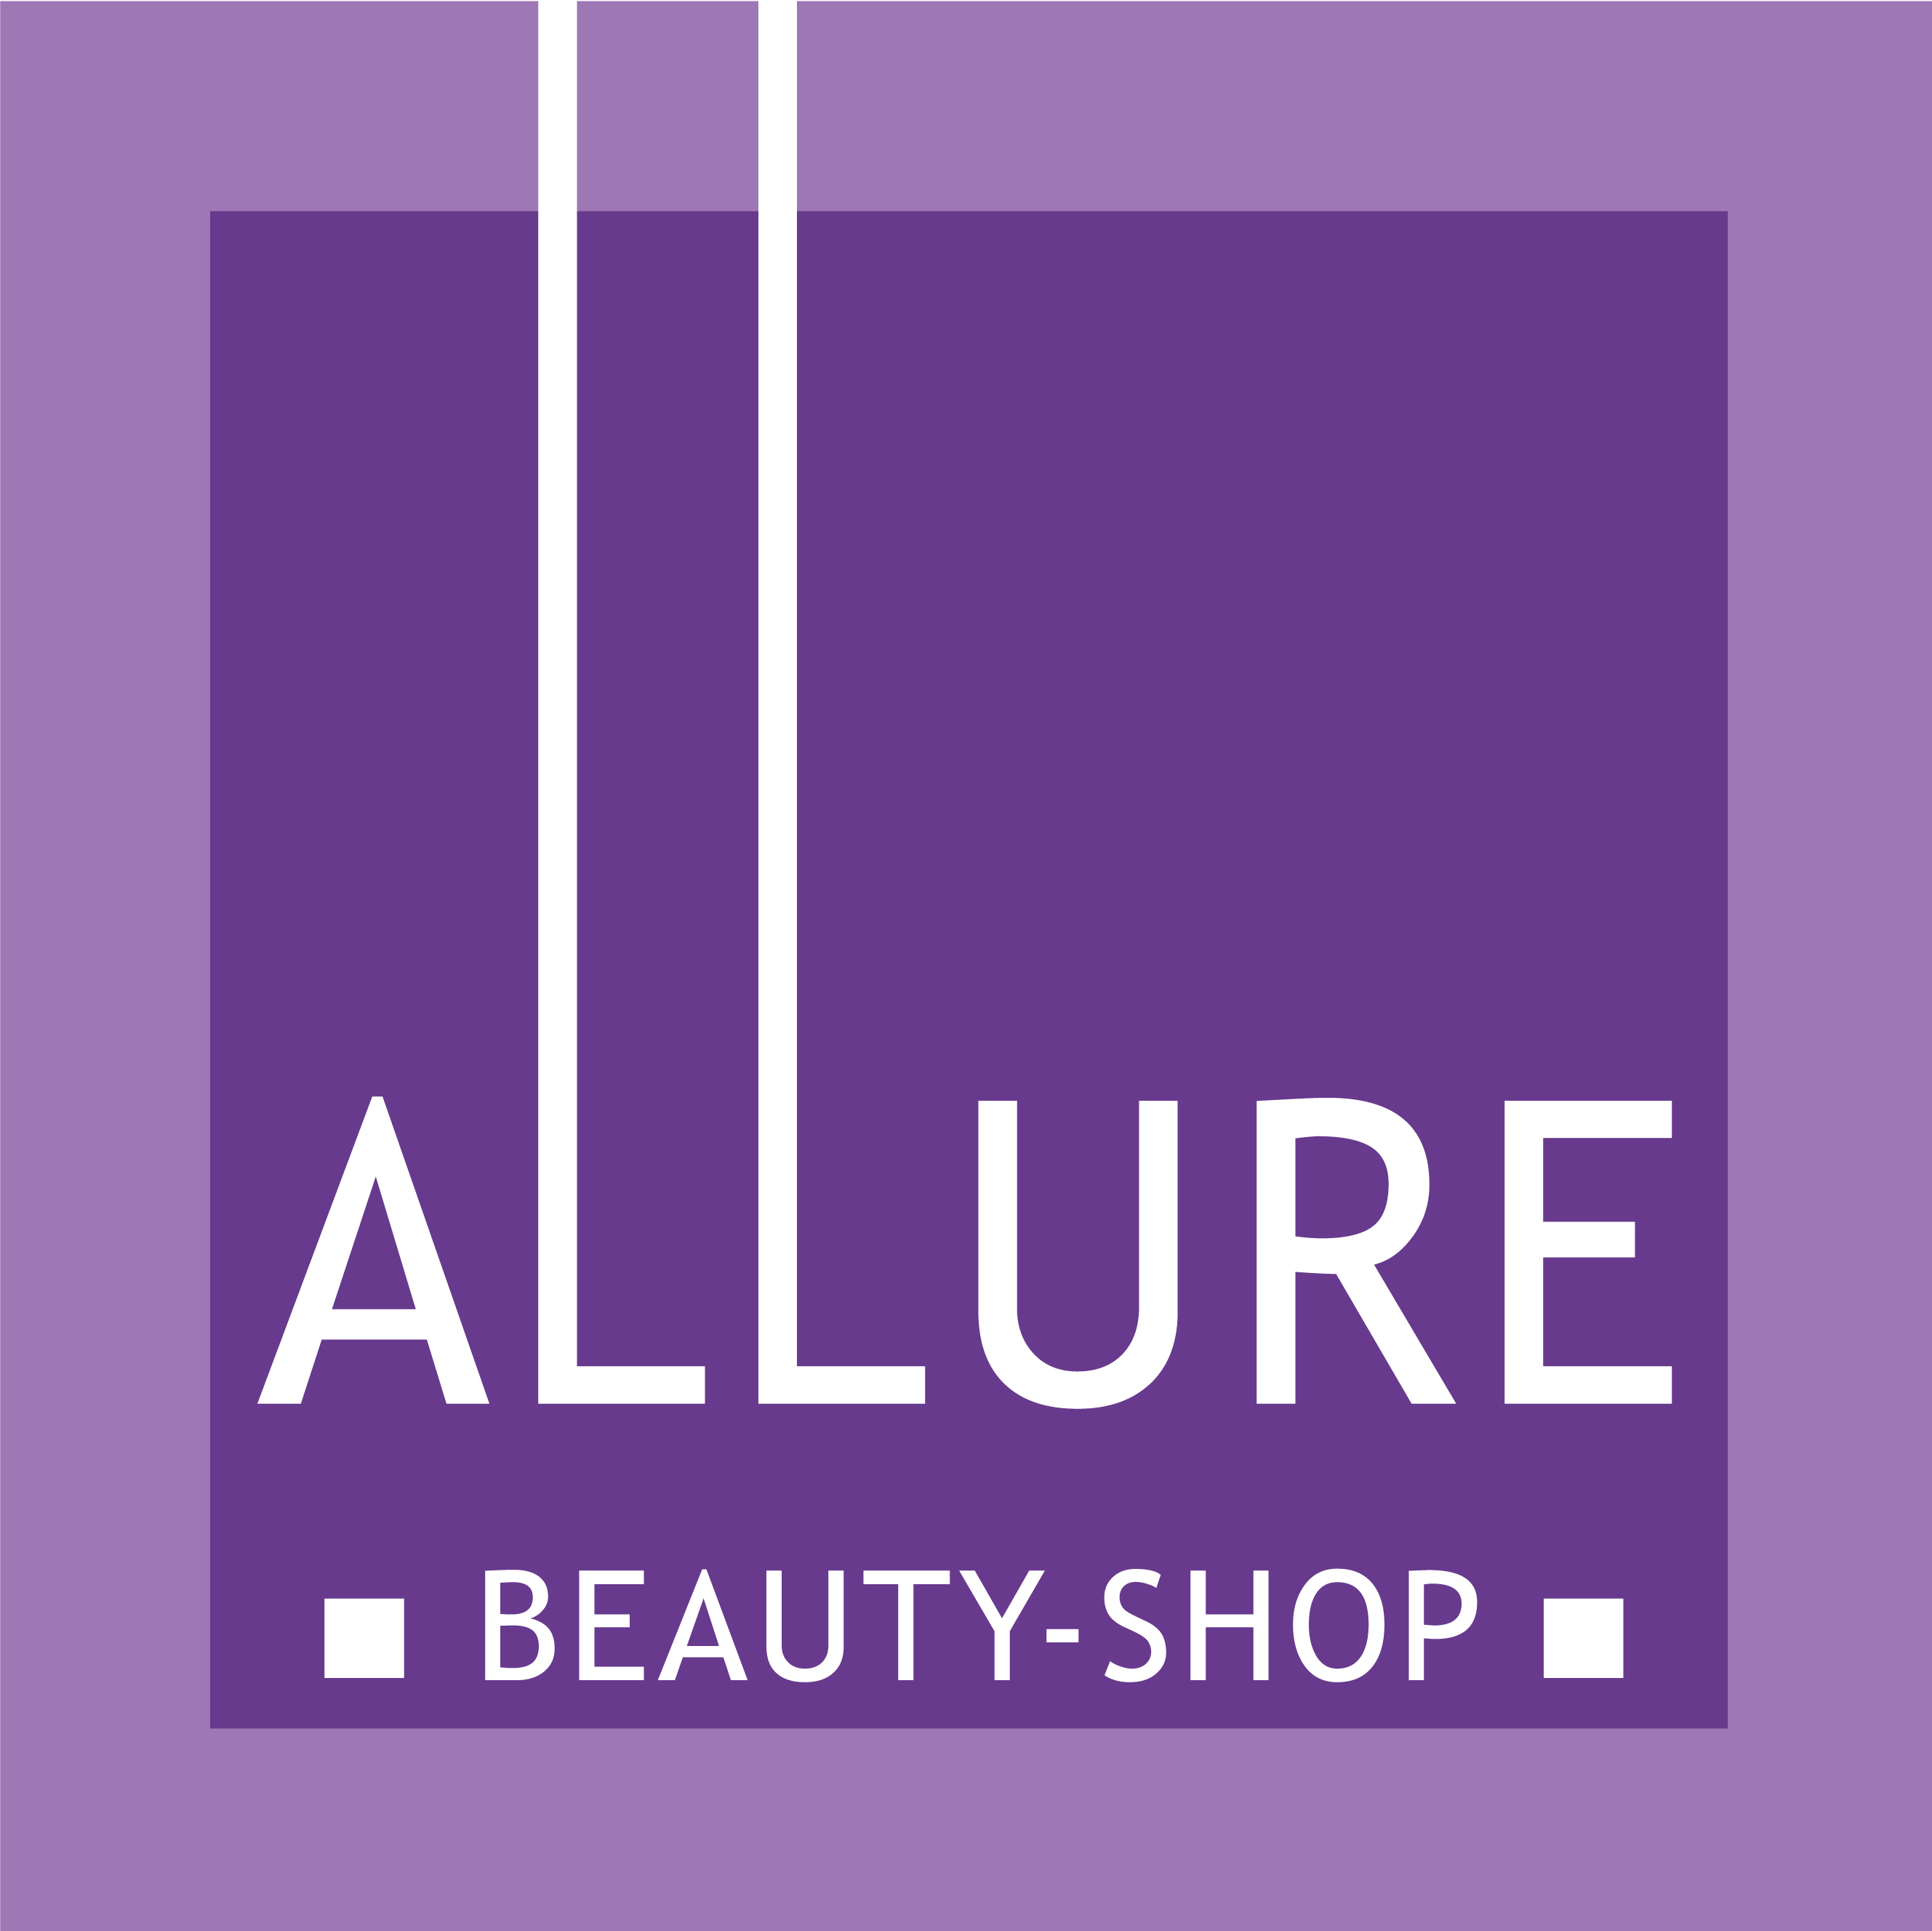 Allure Beauty-Shop